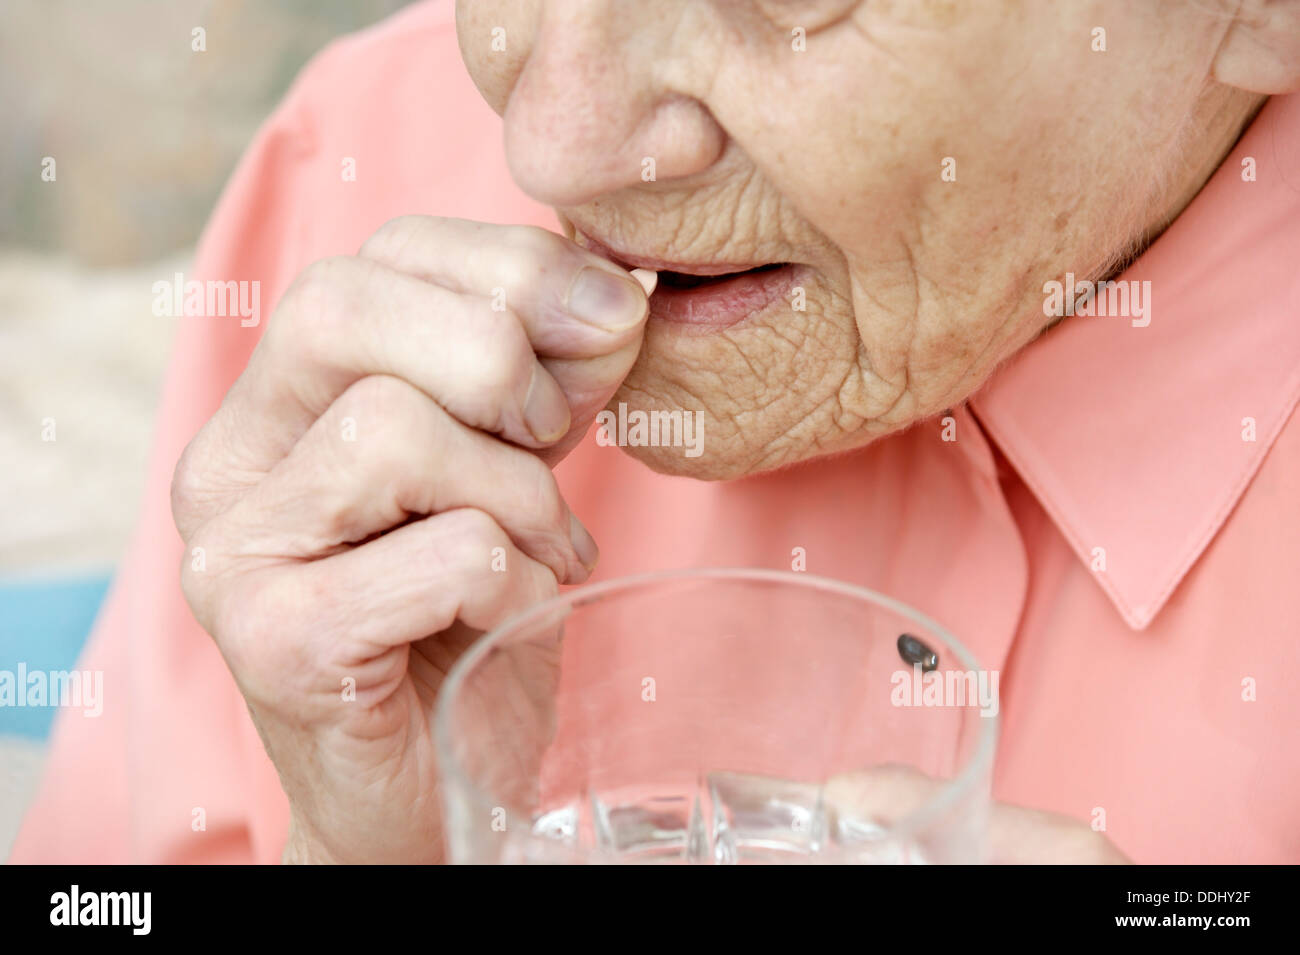 Ältere Frau, die Einnahme einer Tablets Simvastatin (Statine) Medikamente, die die Menge an Cholesterin & Triglyceride im Körper reduziert Stockfoto